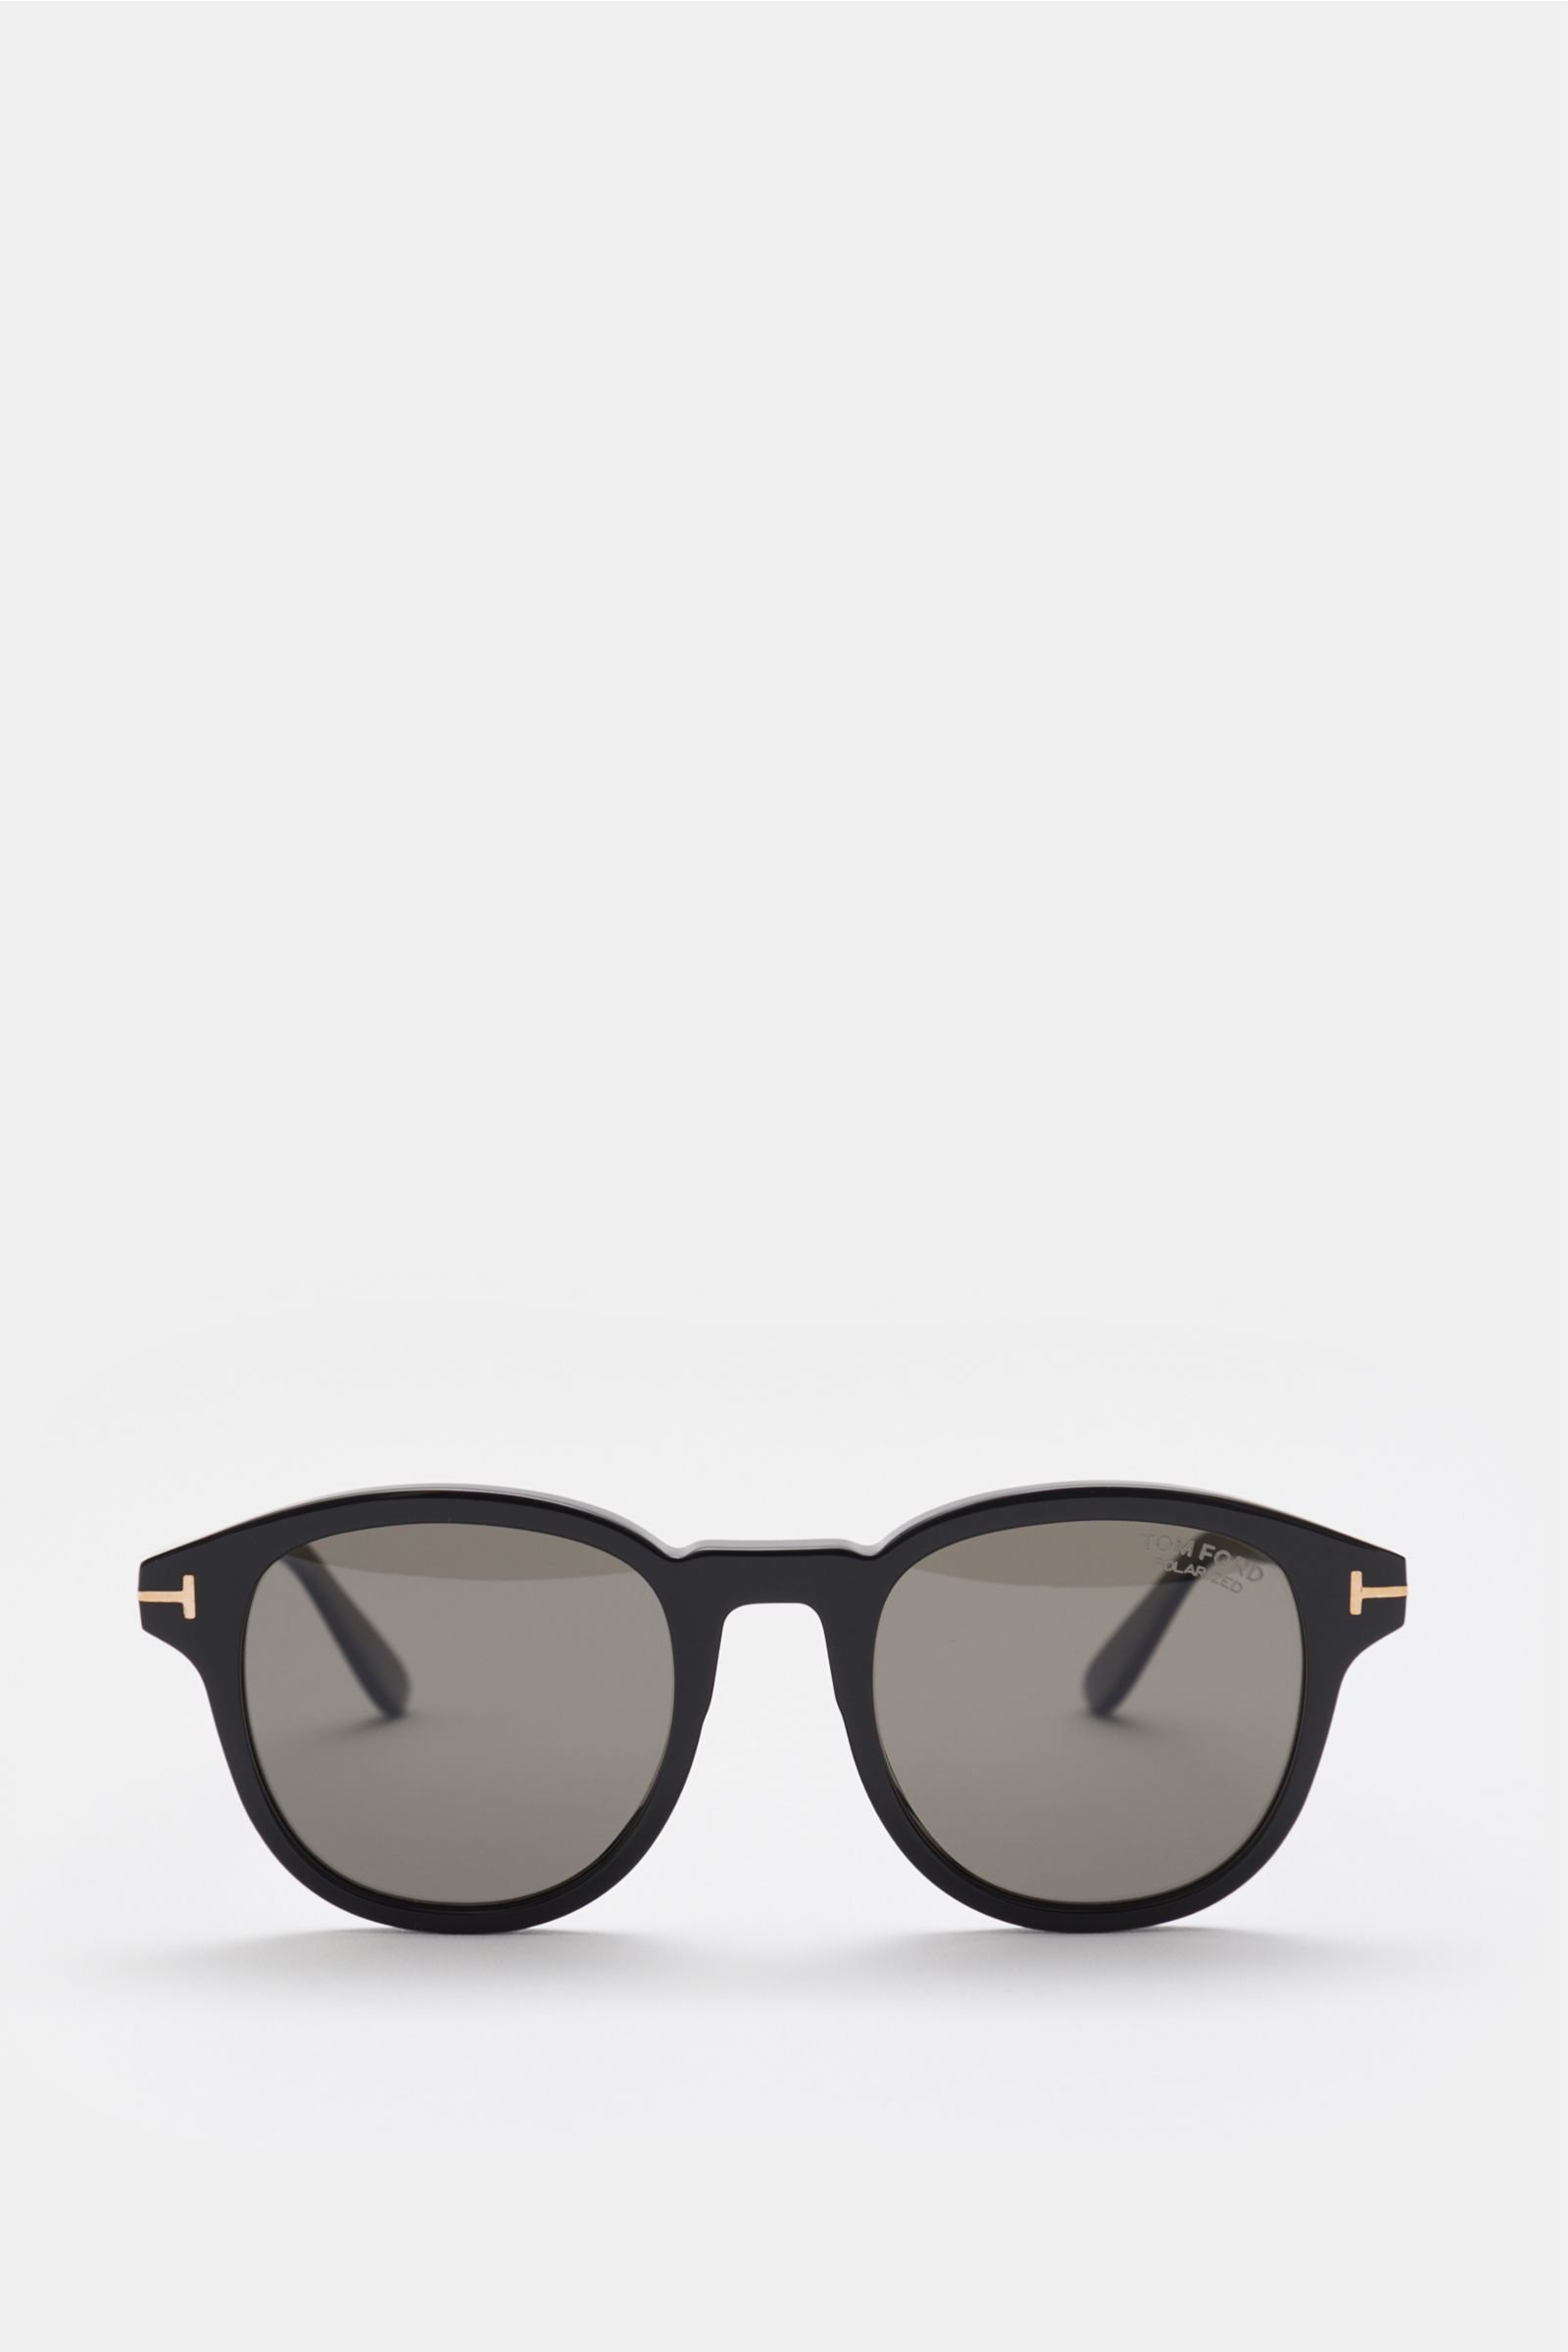 TOM FORD sunglasses 'Jameson' black | BRAUN Hamburg